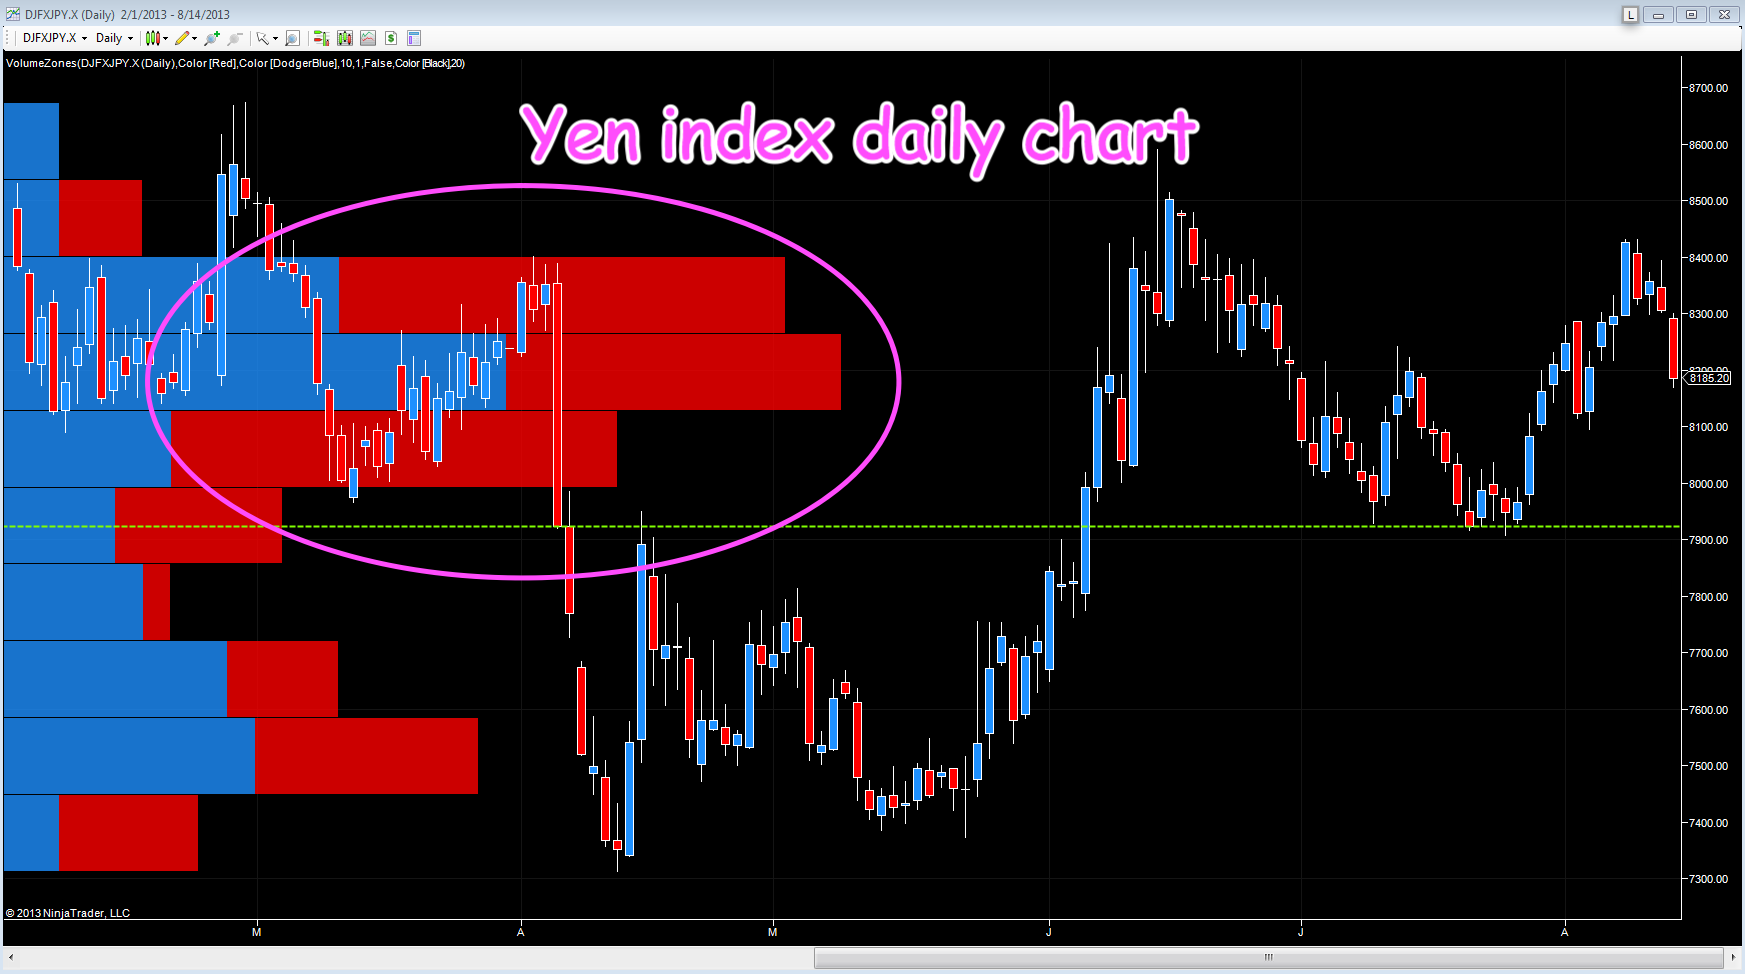 Yen index – daily chart